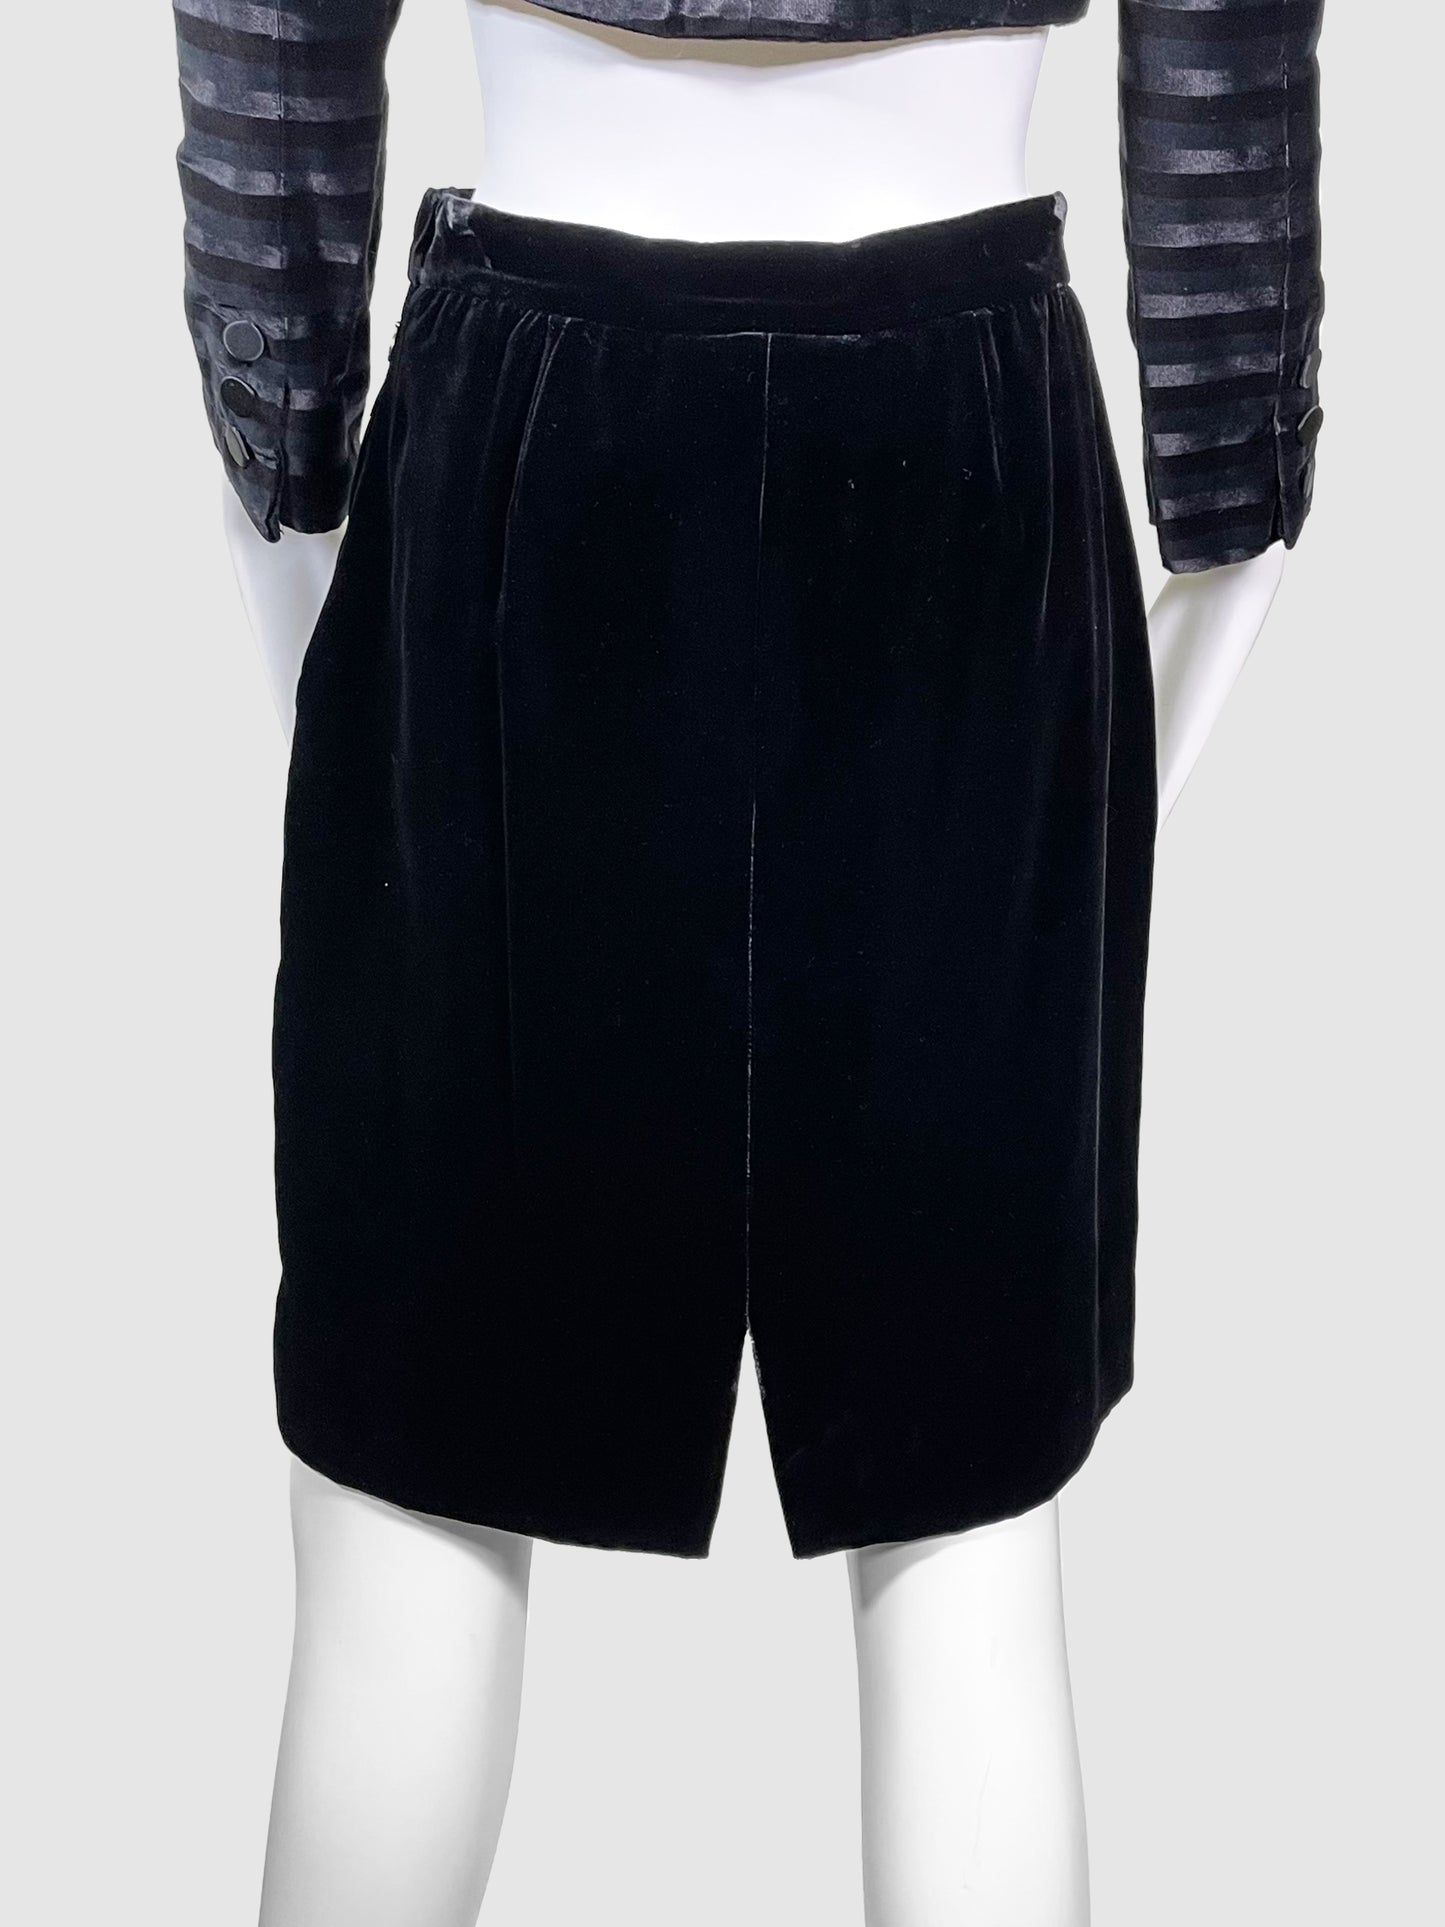 Giorgio Armani Velvet Skirt - Size 44